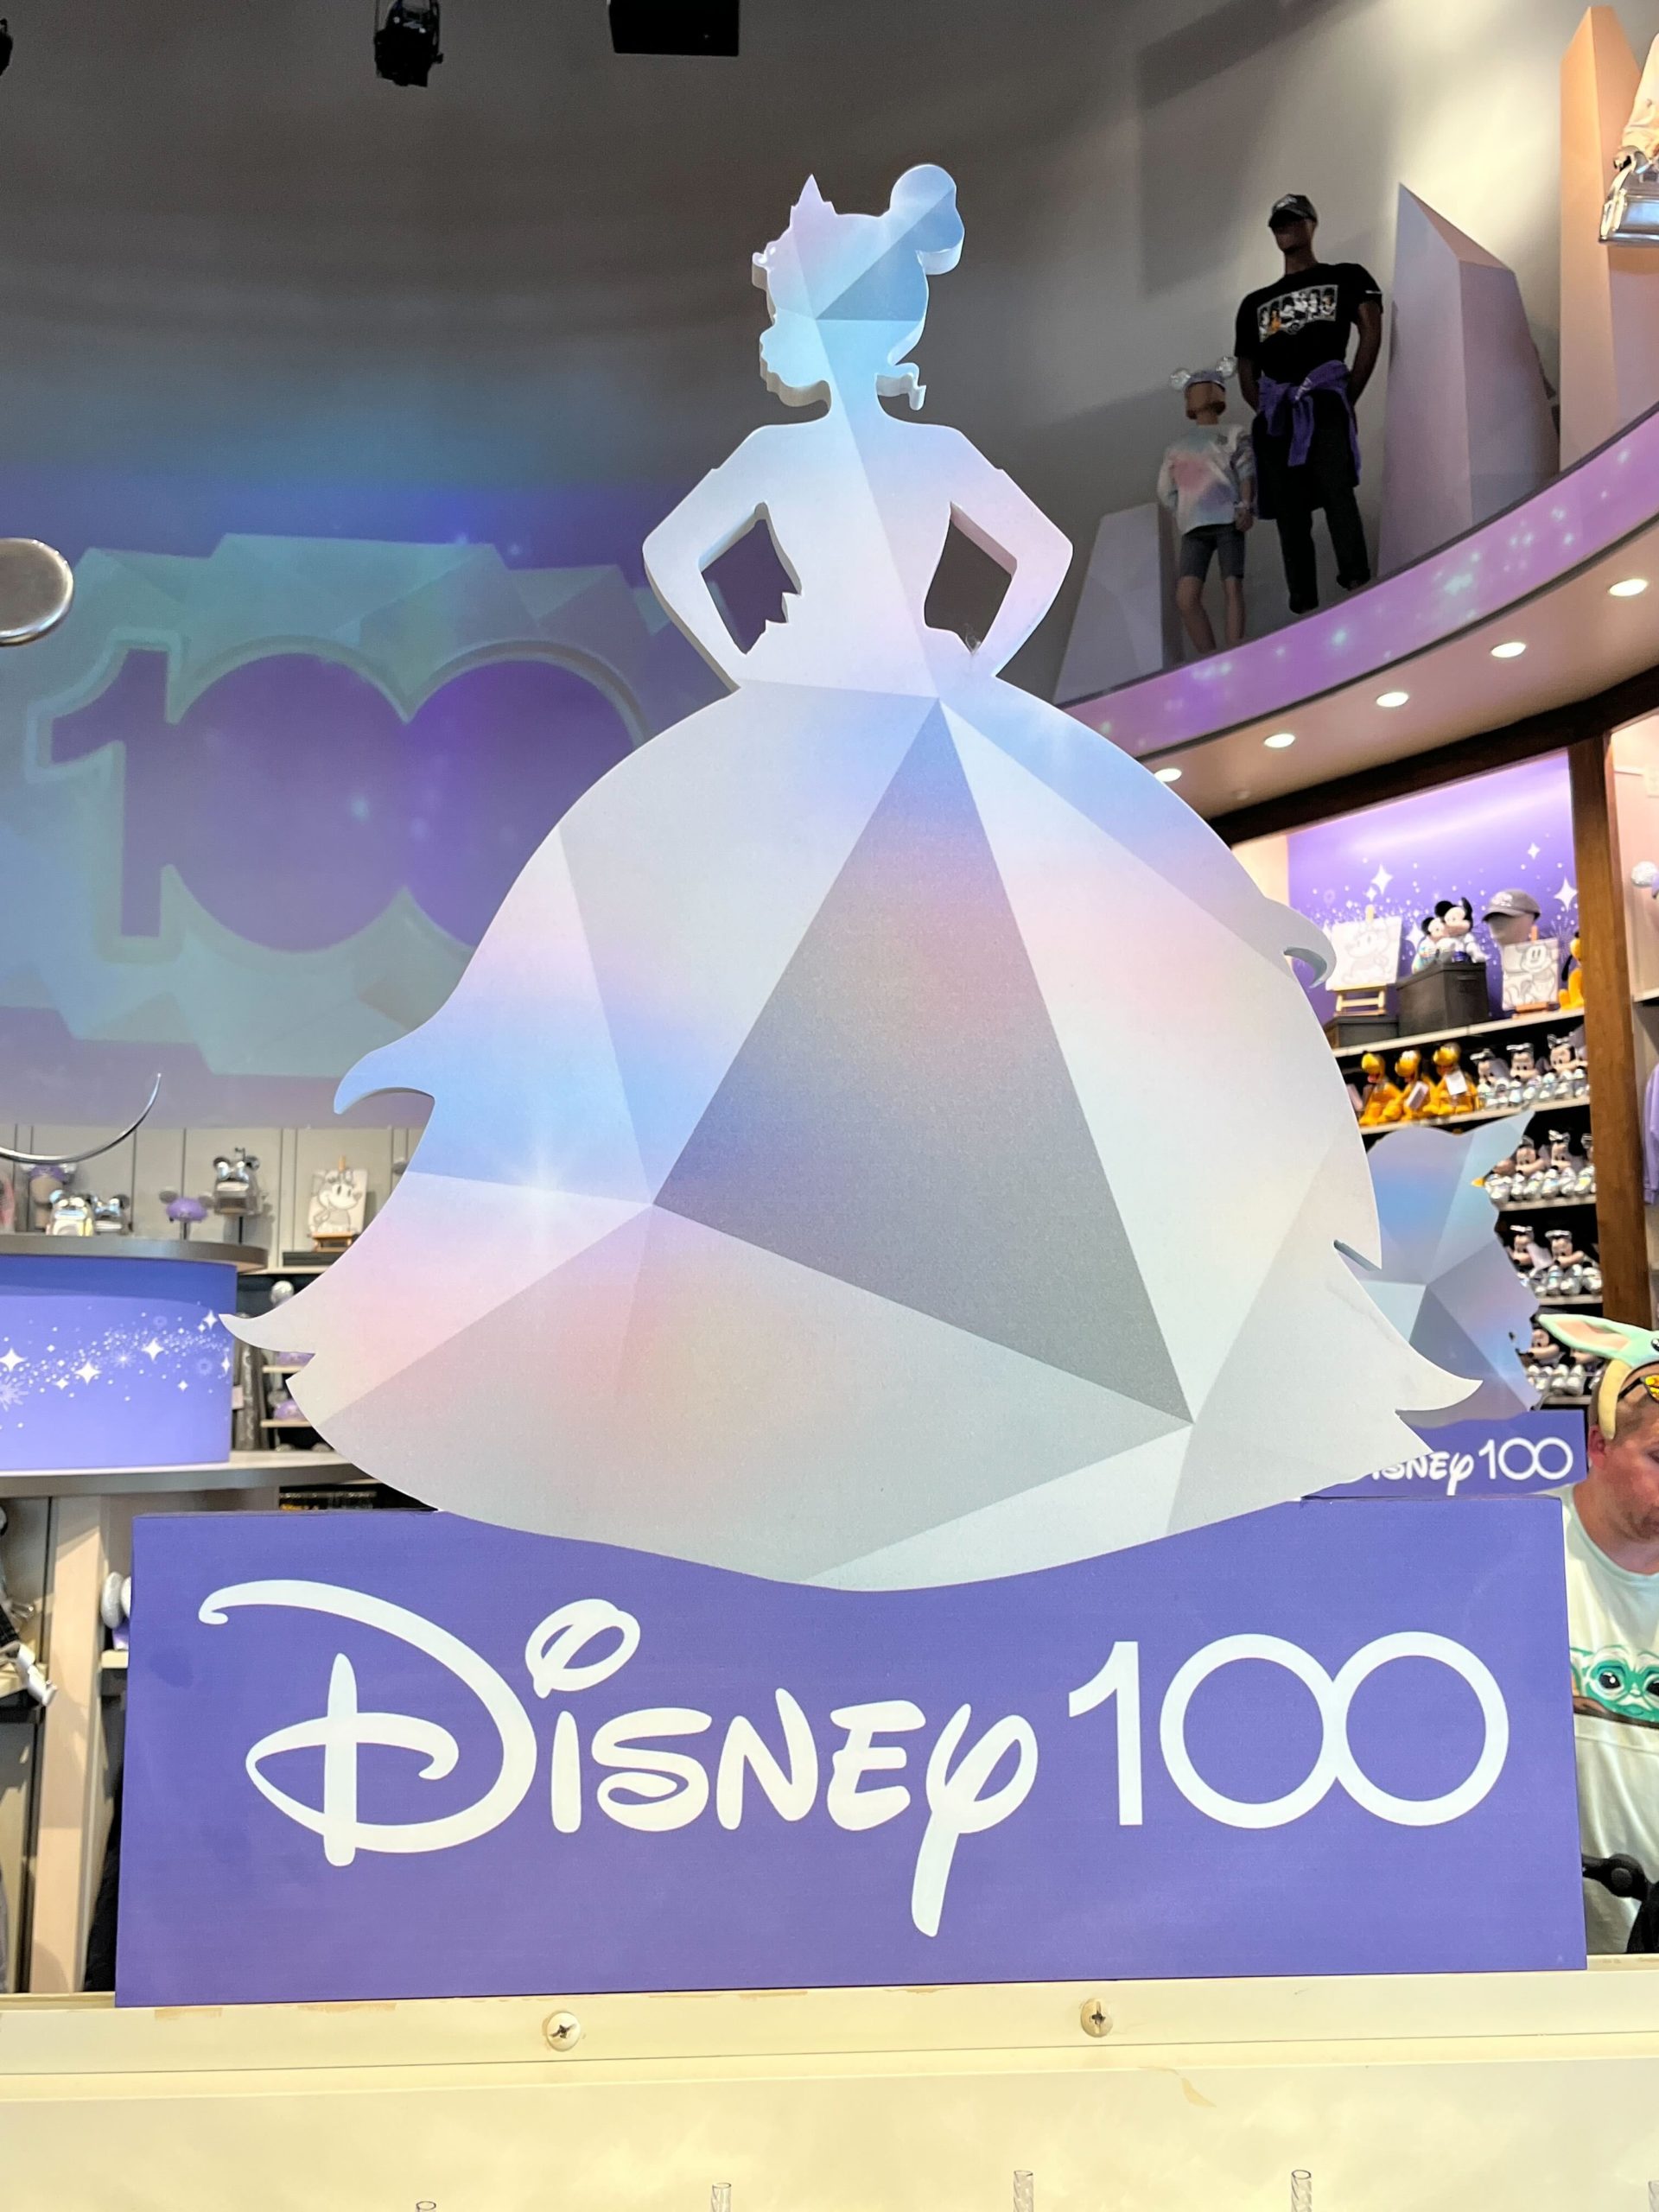 Disney100 Displays WOD